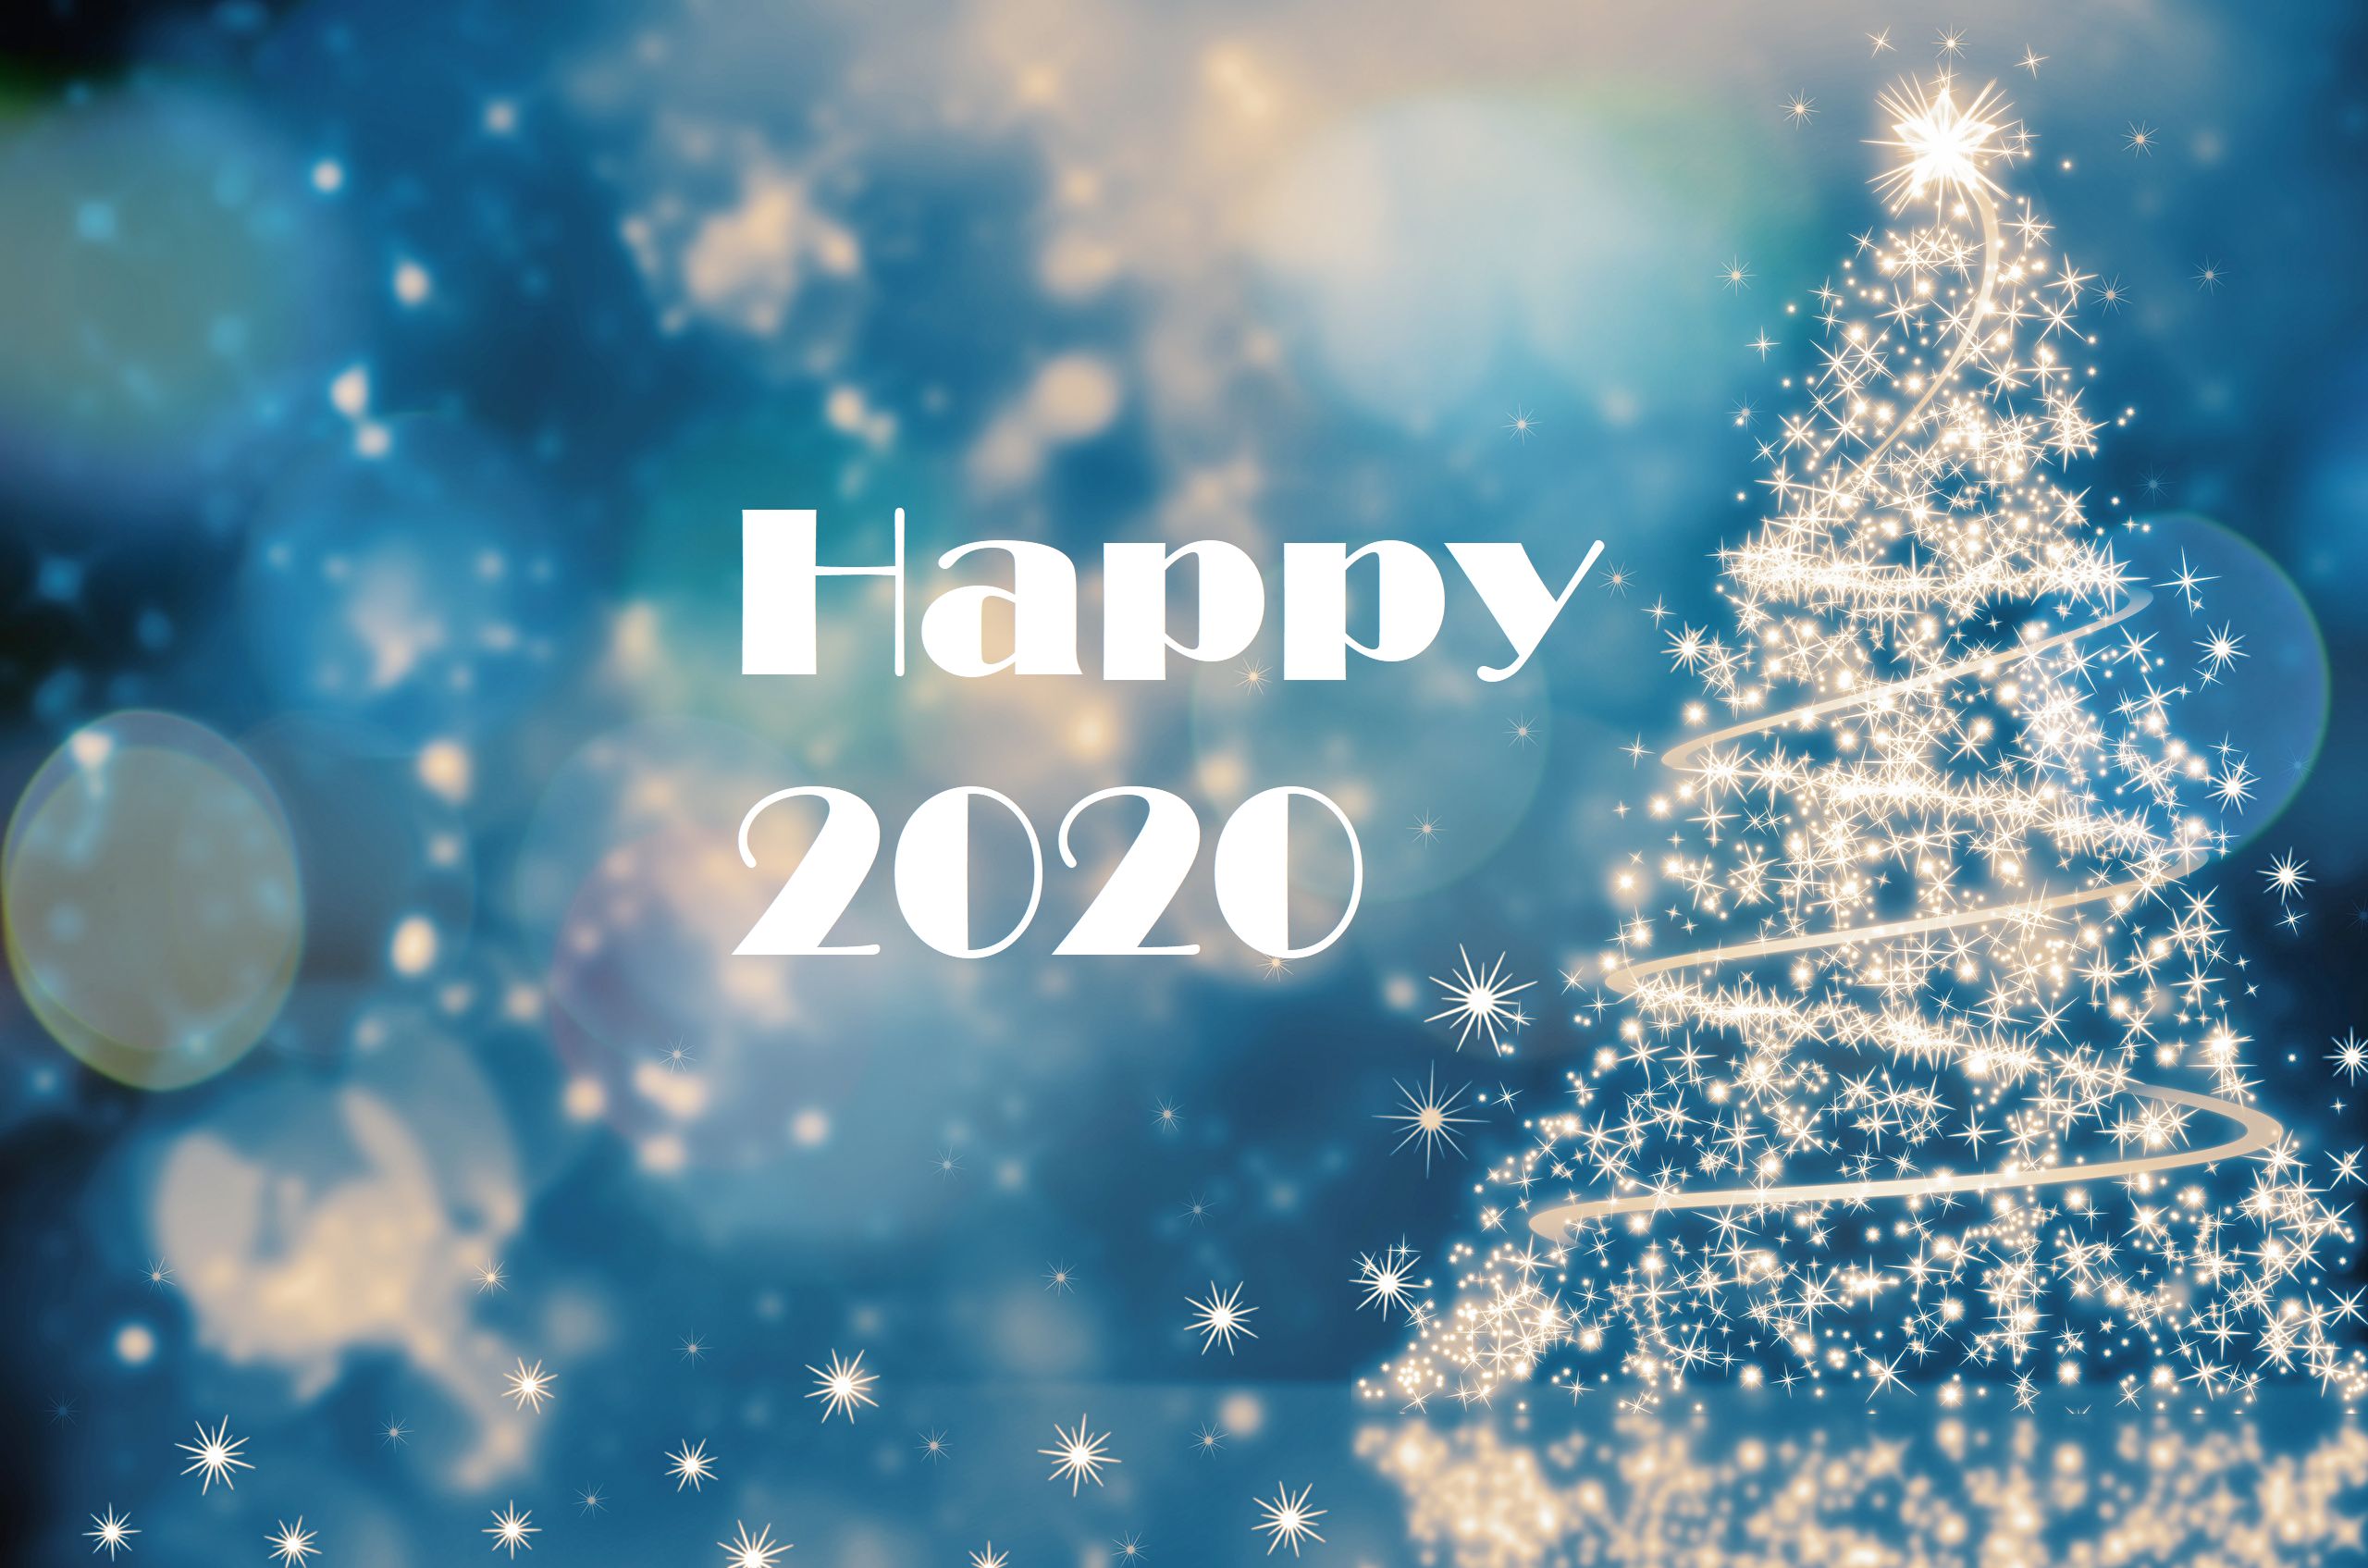 holiday, new year 2020, christmas tree, happy new year